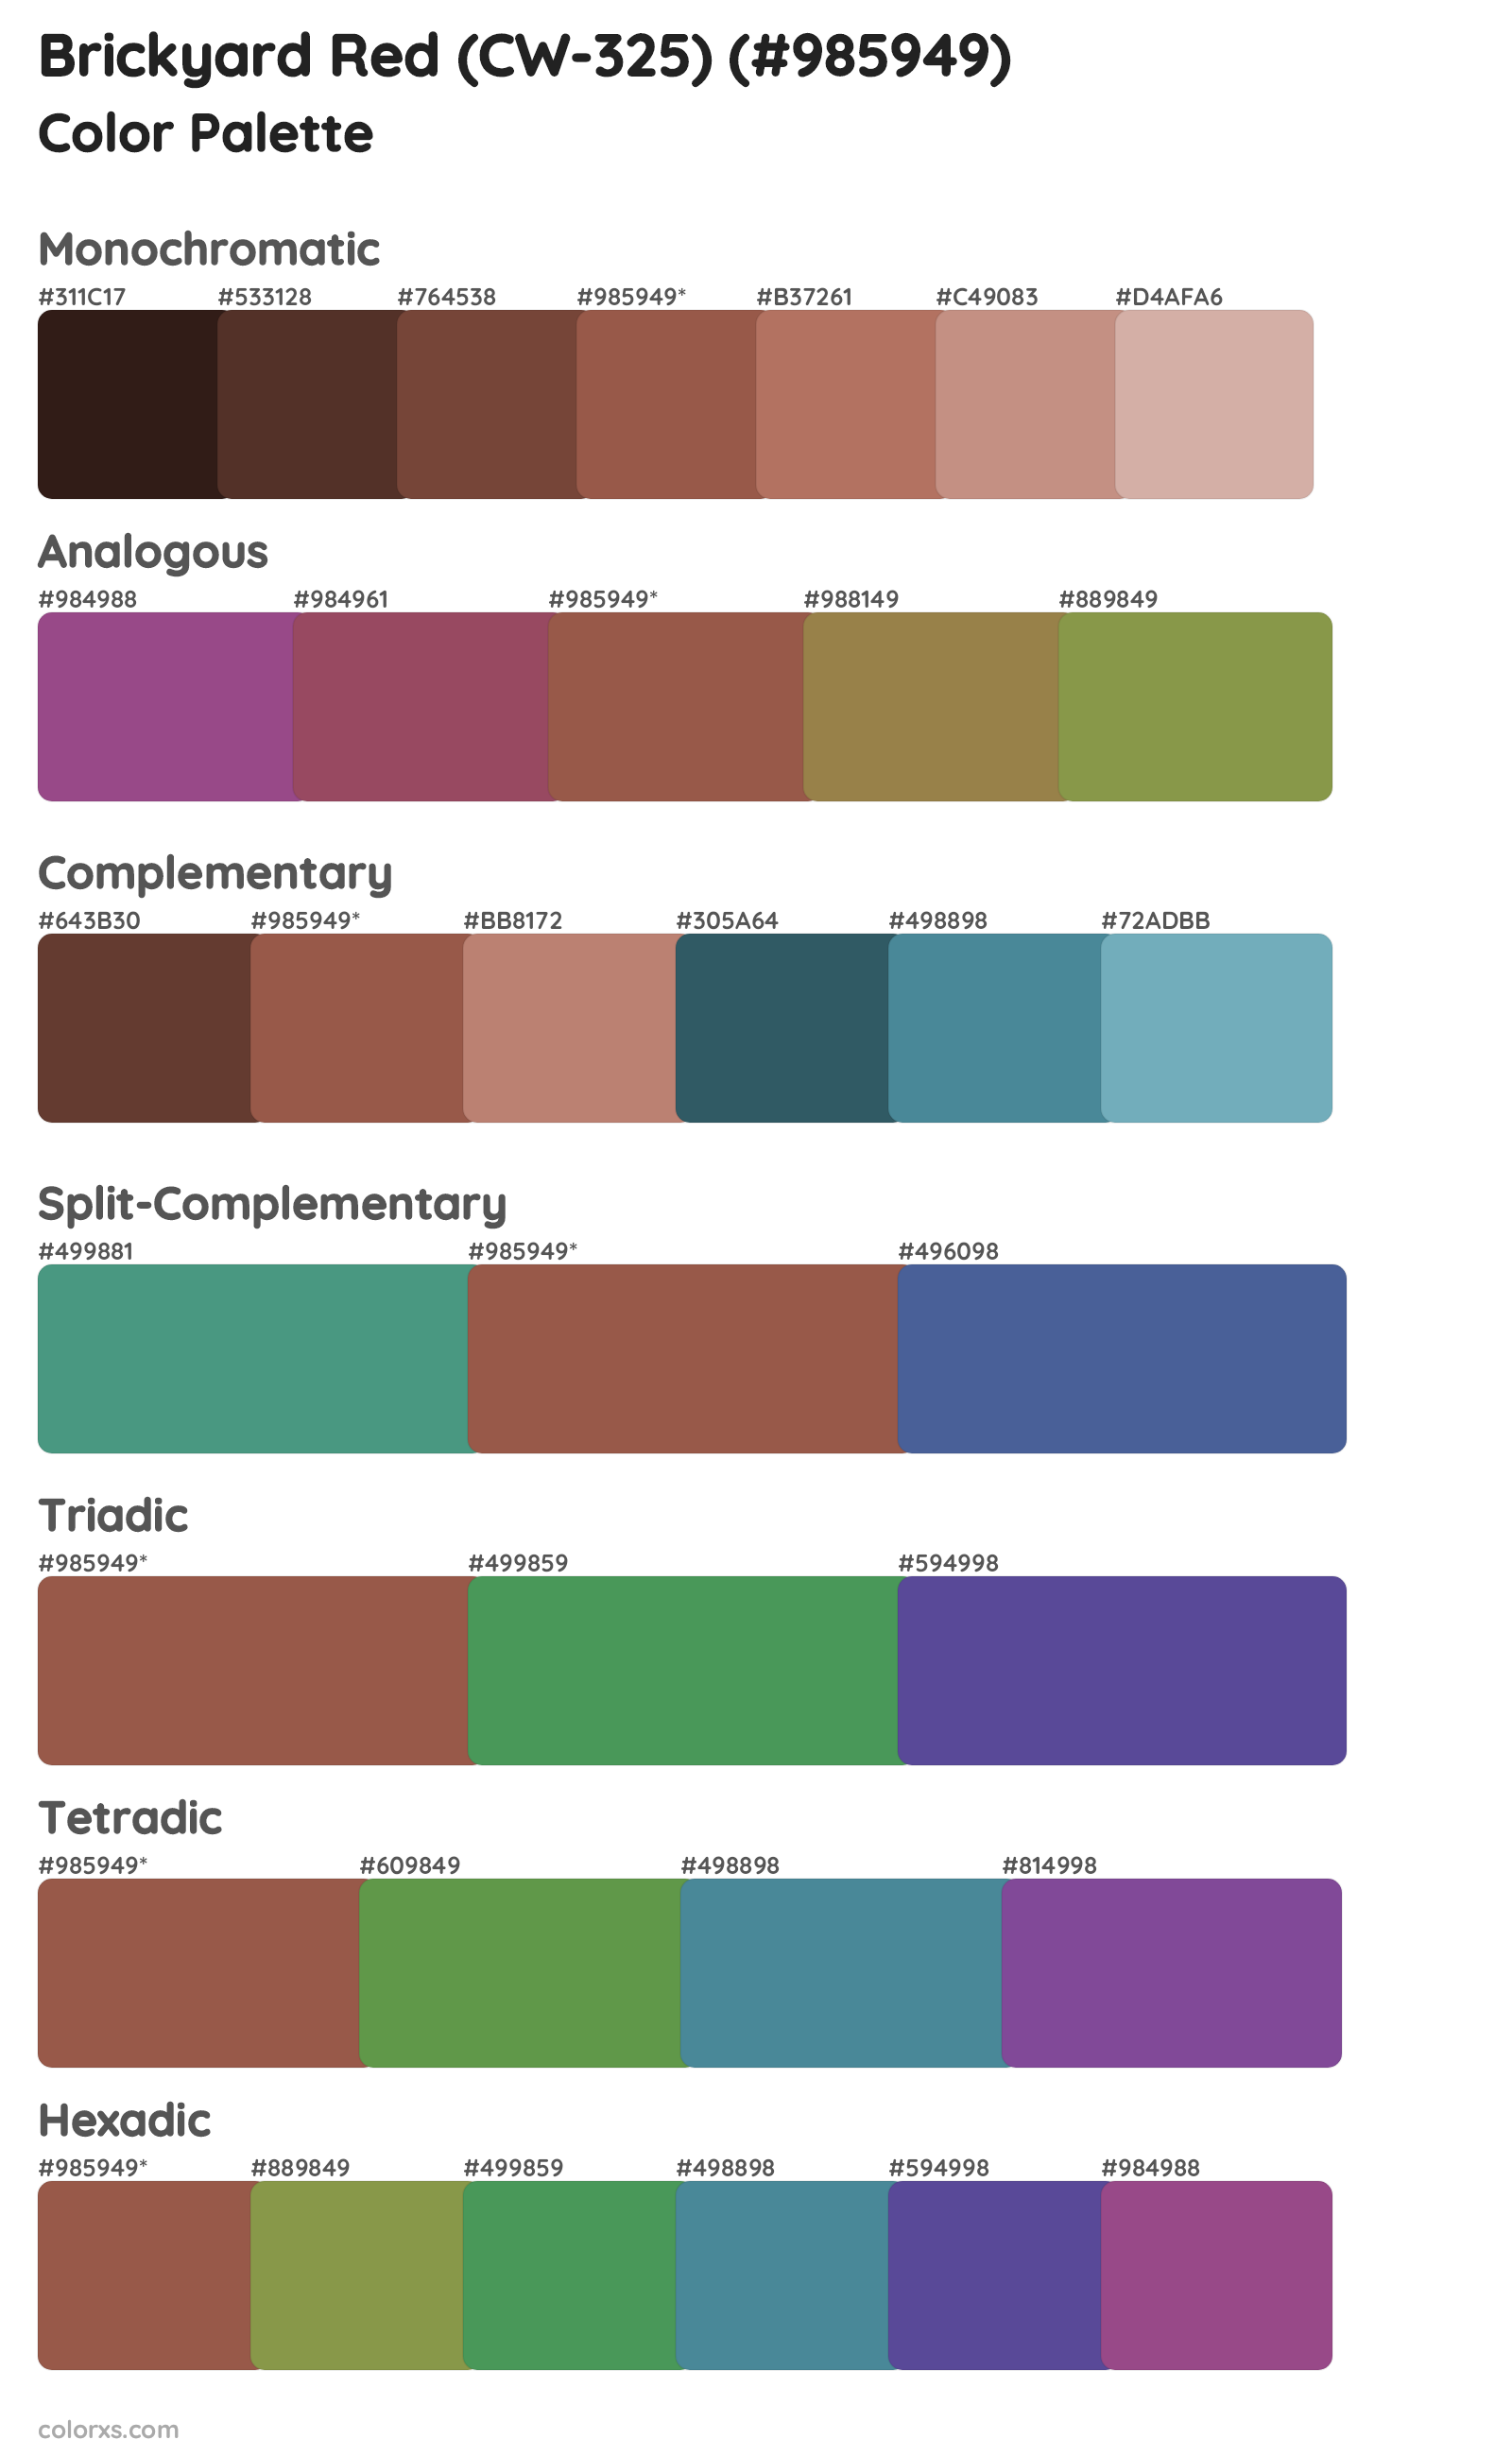 Brickyard Red (CW-325) Color Scheme Palettes